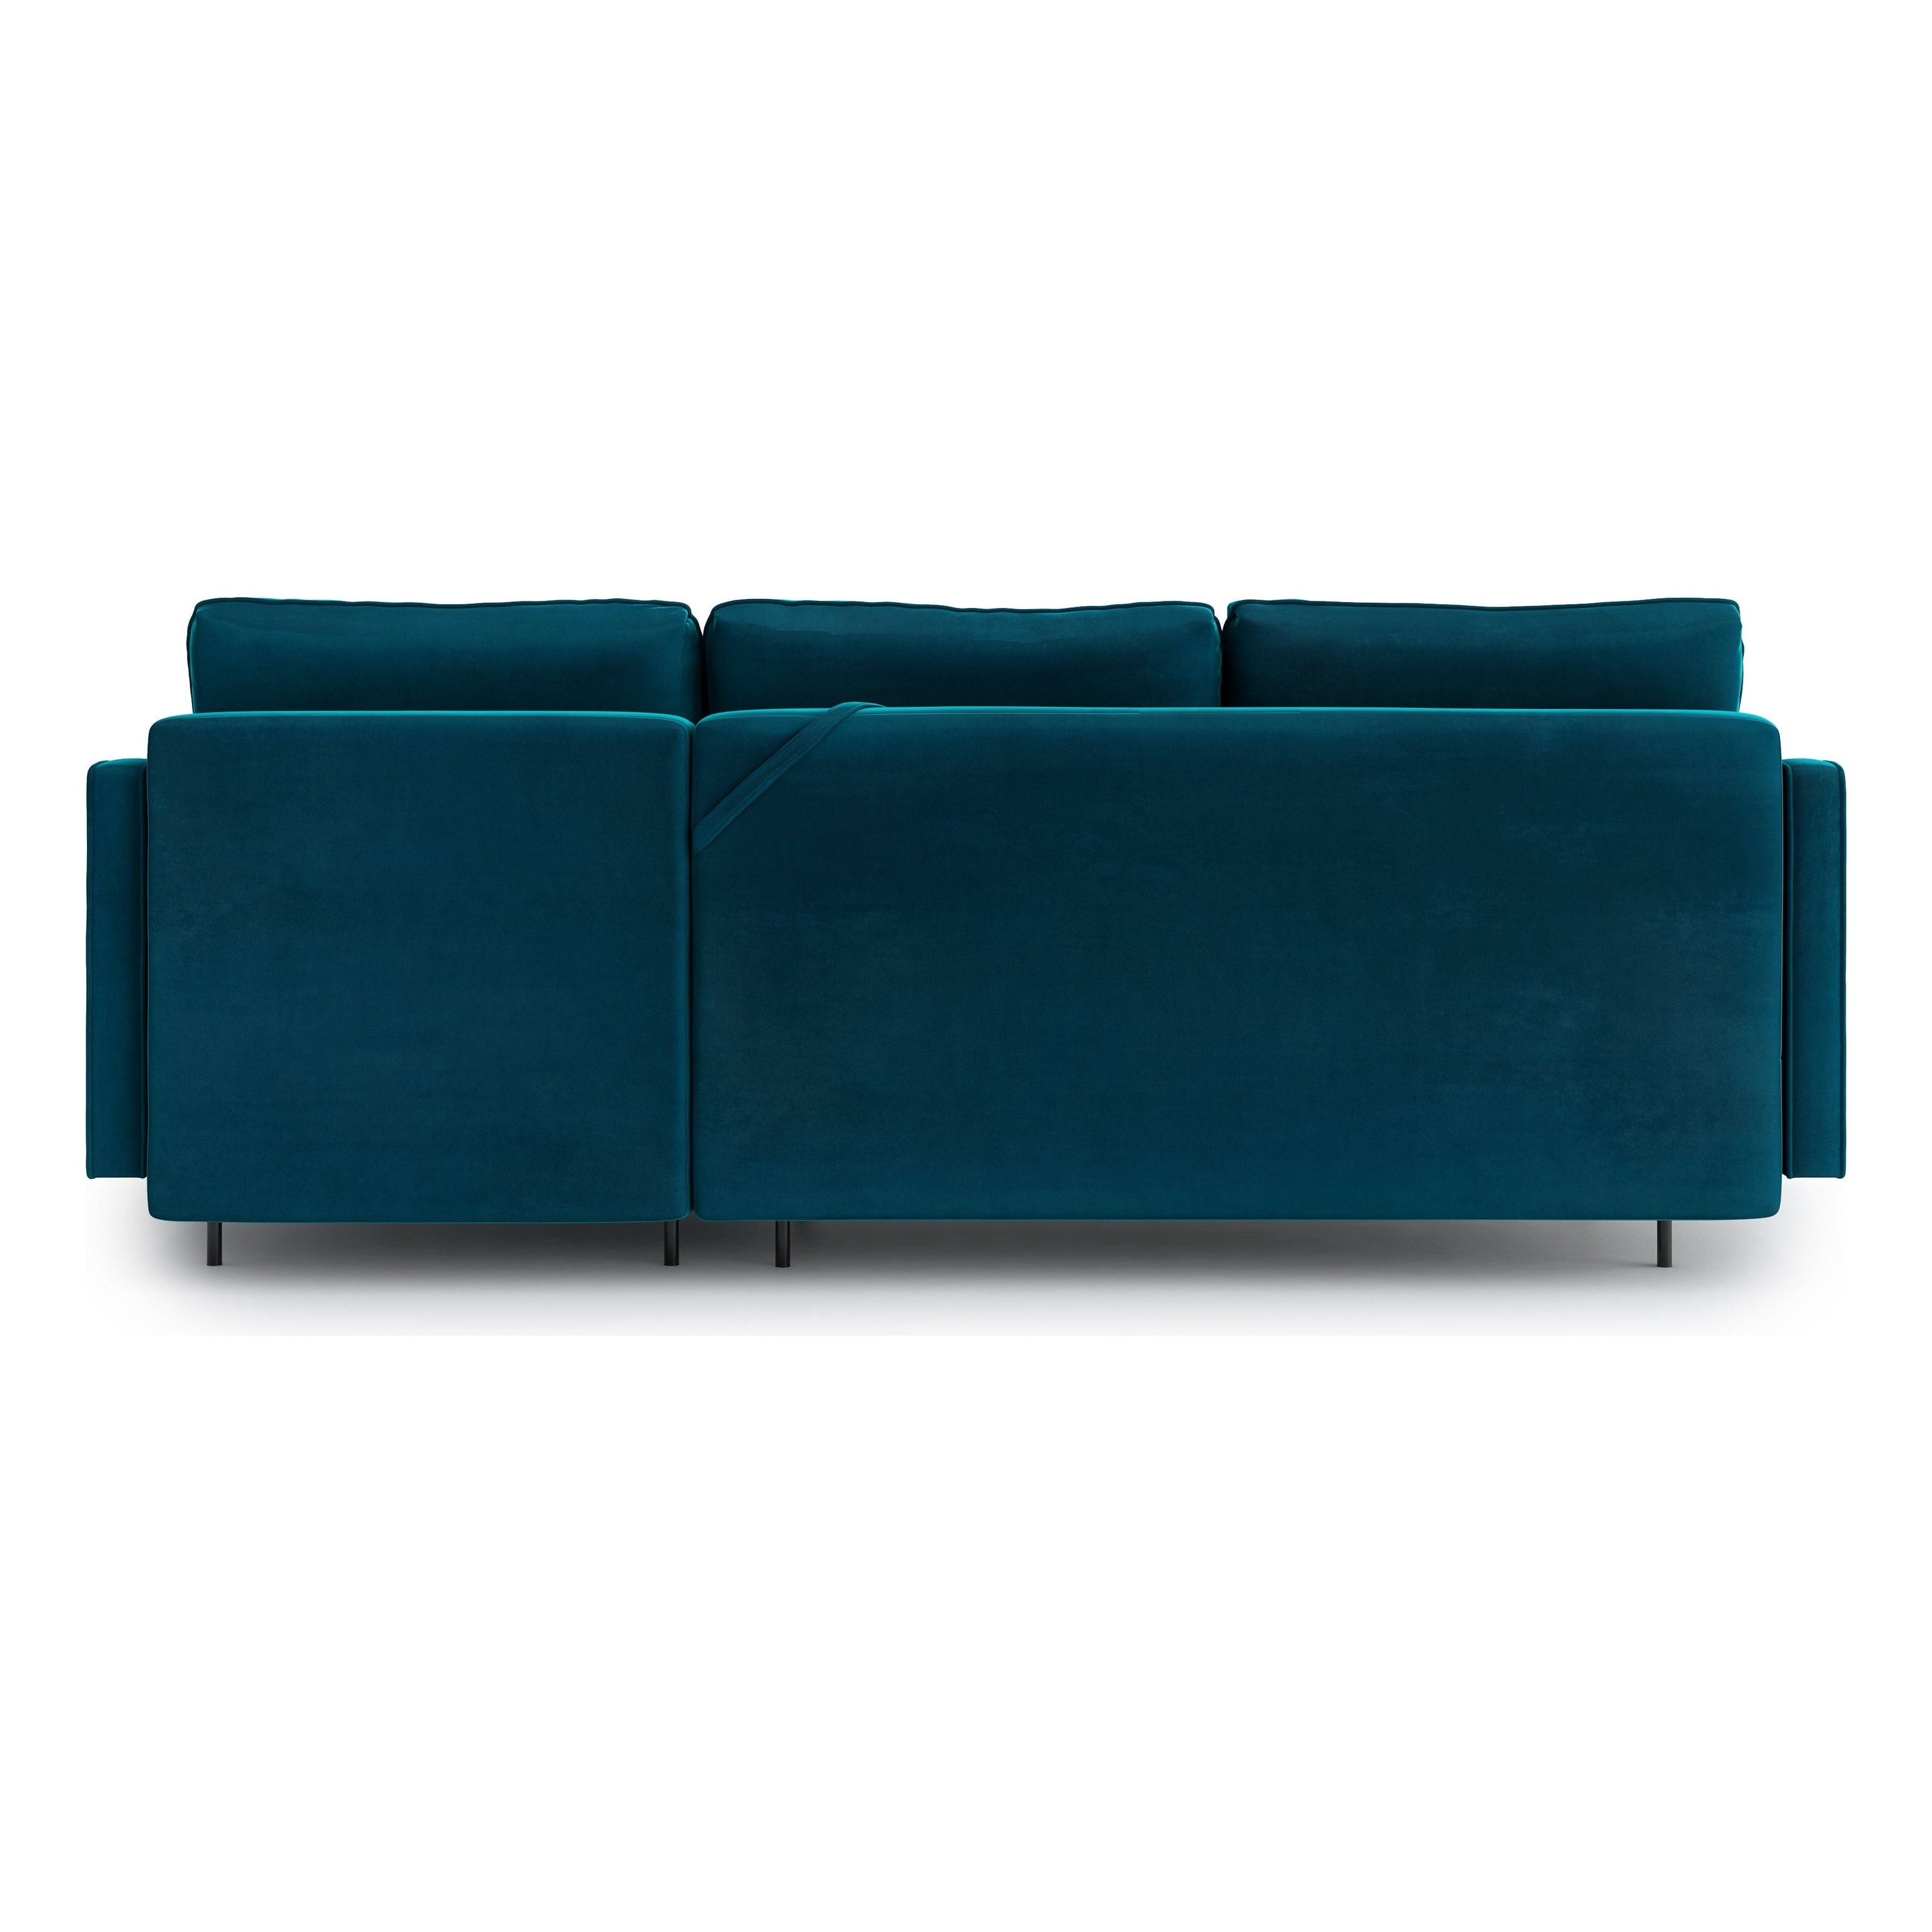 ABBE kampinė sofa lova, keičiamo kampo, mėlyna spalva